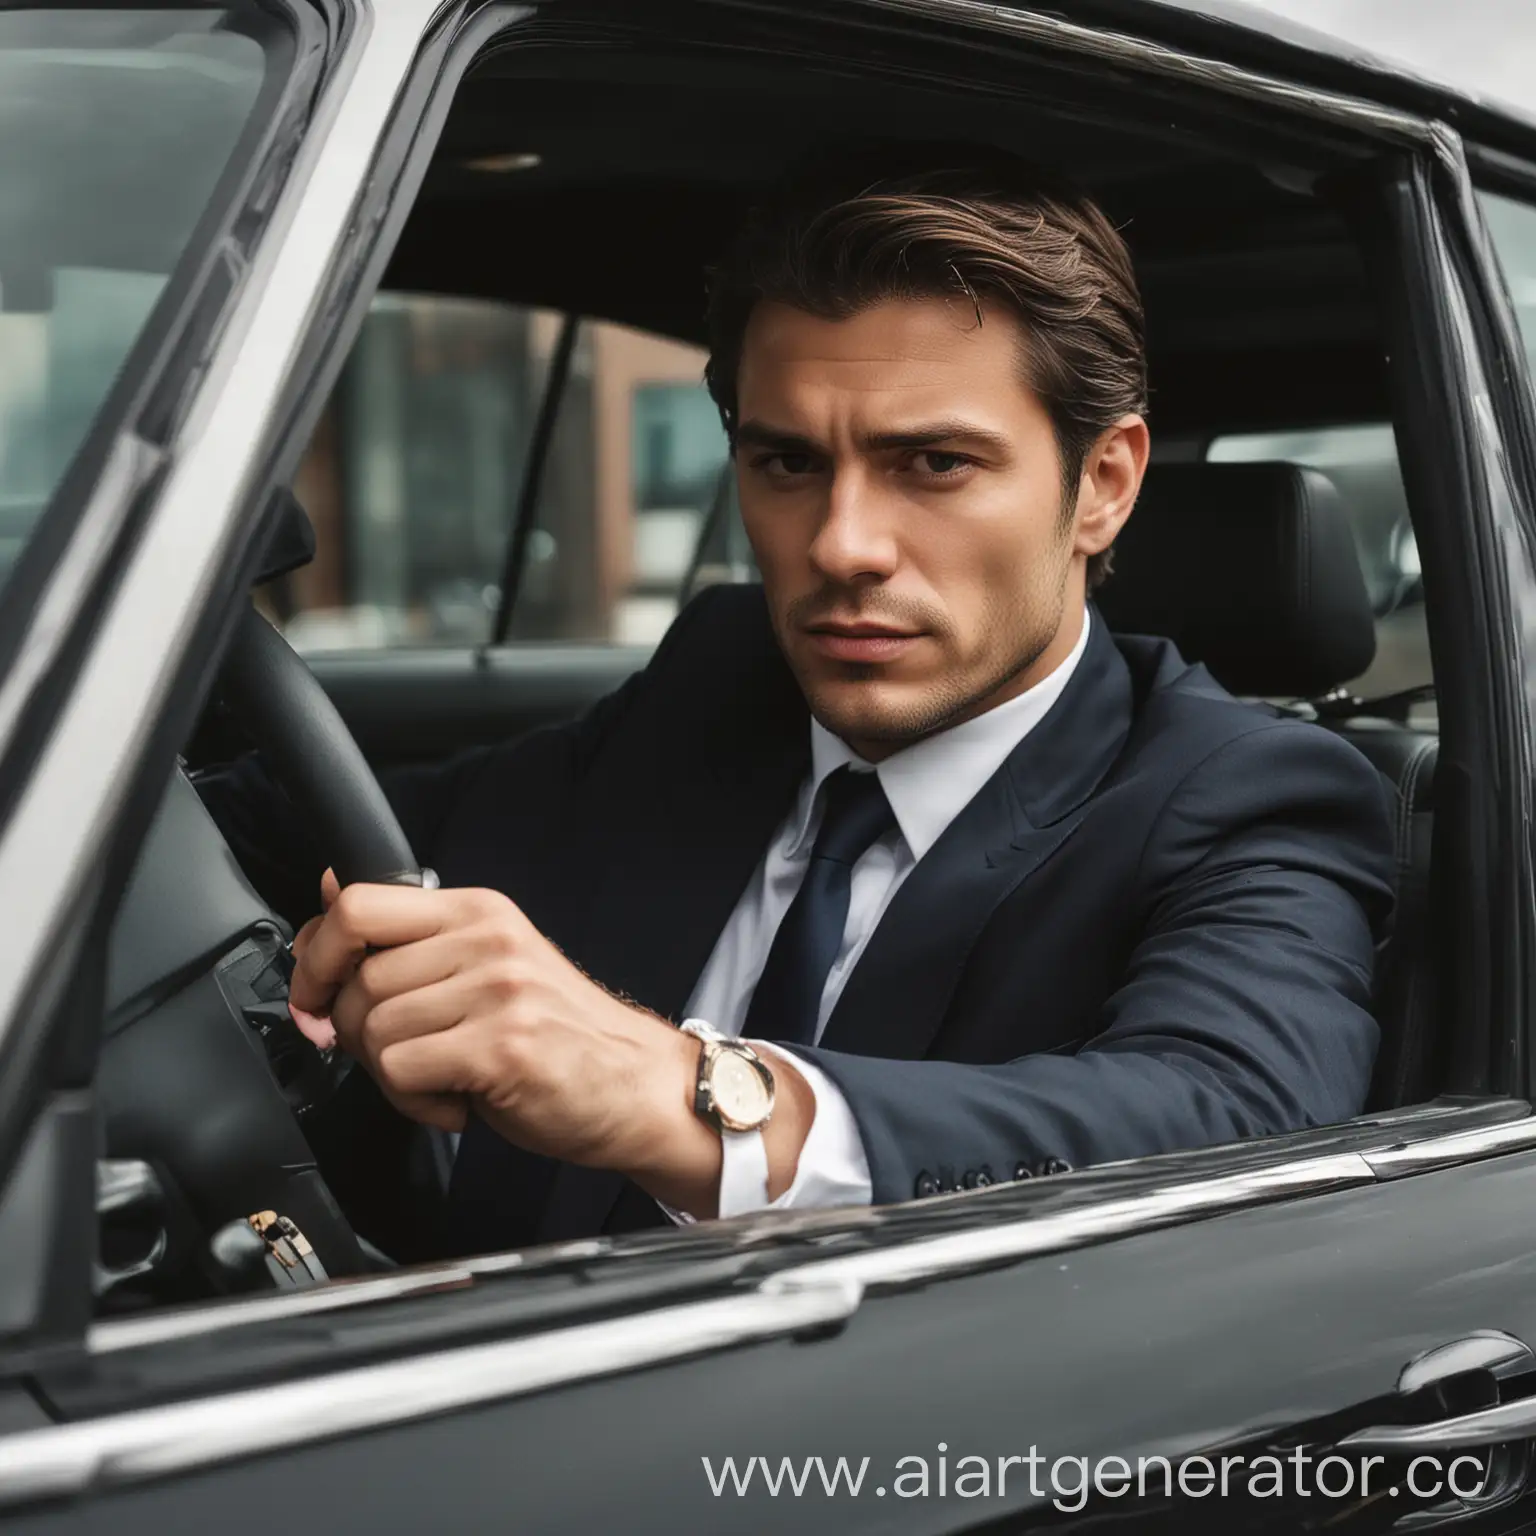 Businessman-Driving-Car-in-Formal-Attire